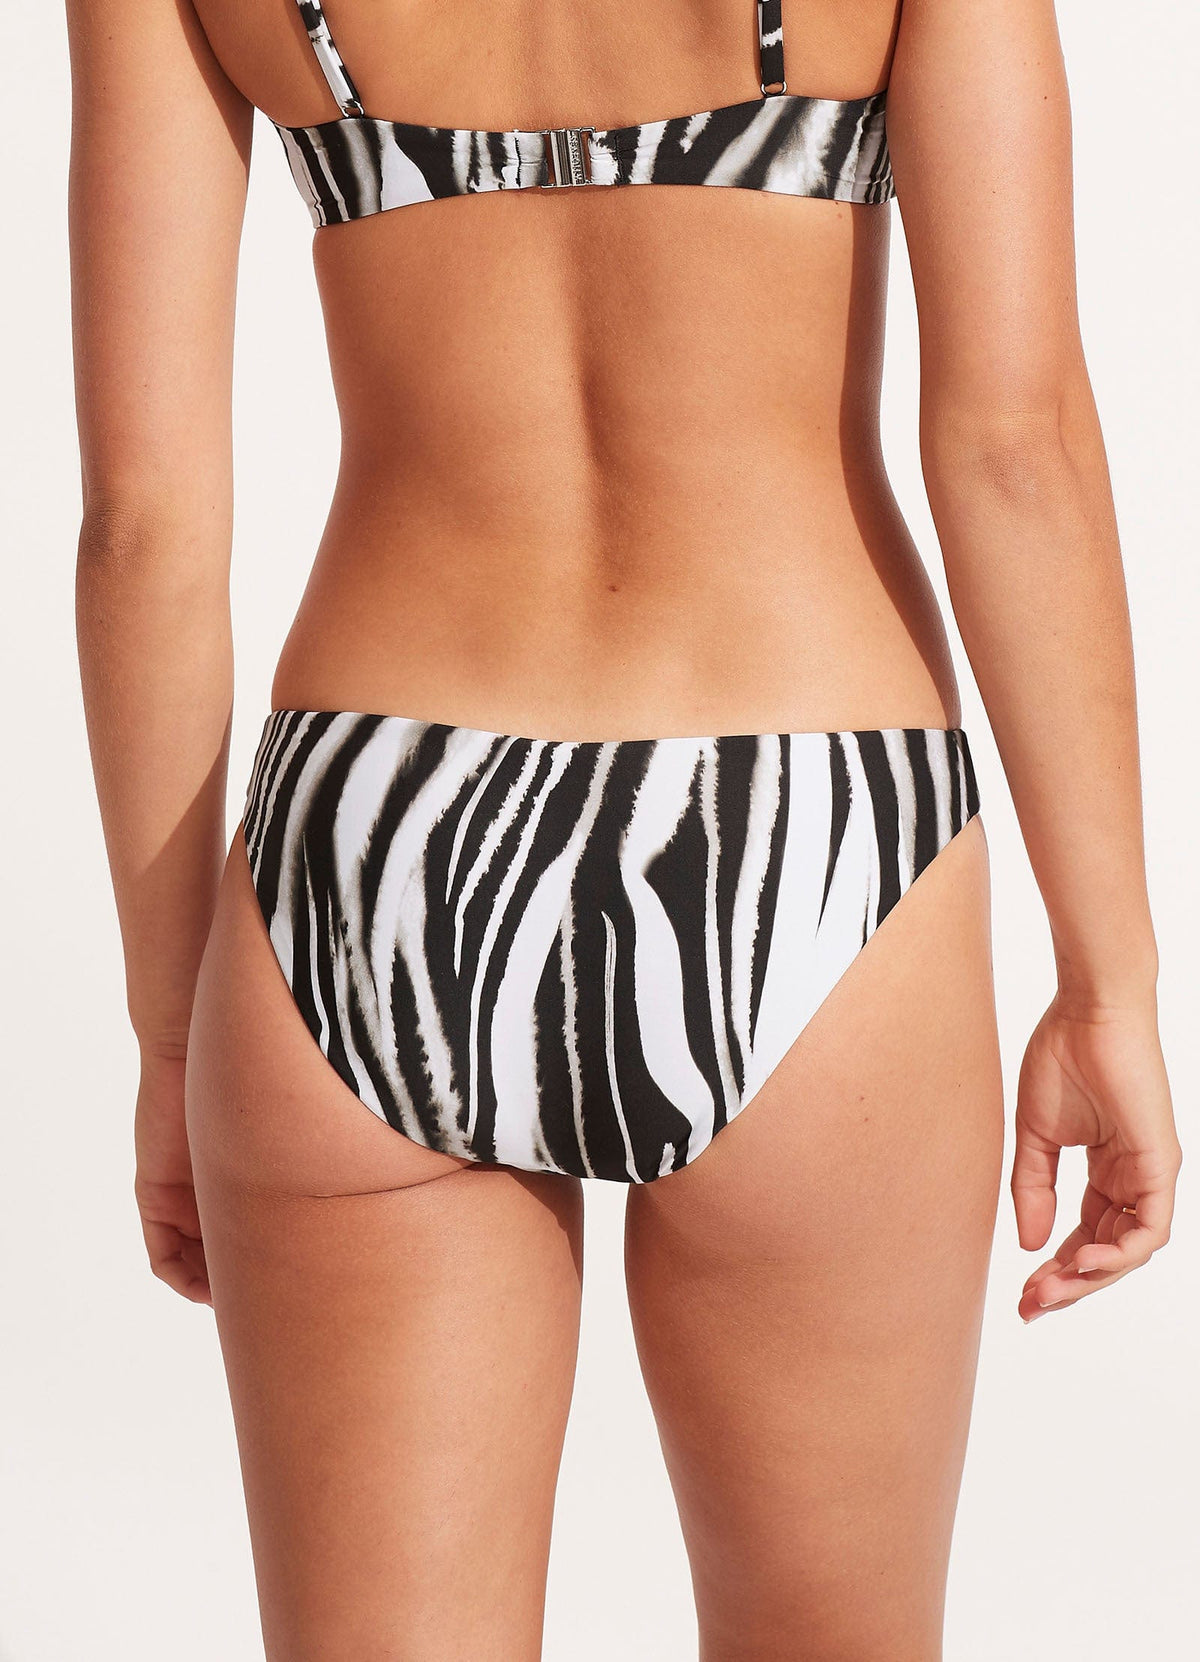 Zahara Hipster Pant - Seafolly - Splash Swimwear  - bikini bottoms, new arrivals, SALE, Seafolly, women swimwear - Splash Swimwear 